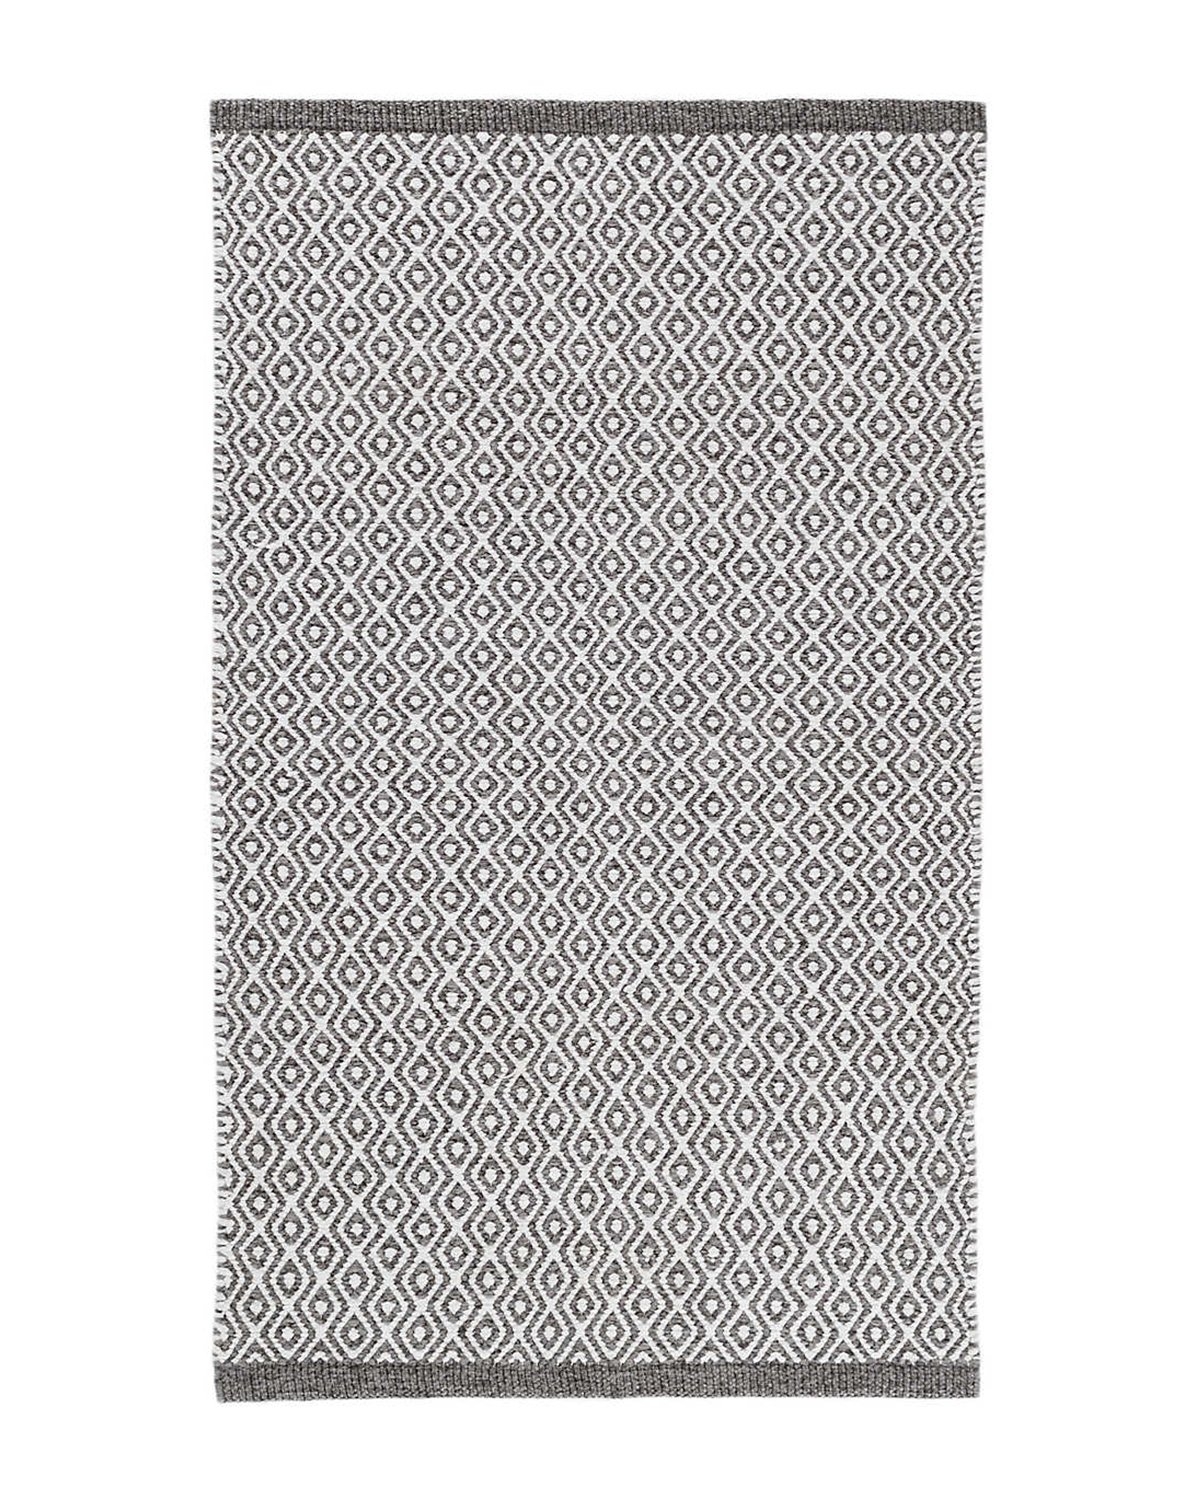 FACET CHENILLE GRAY INDOOR/OUTDOOR RUG, 3' x 5' - Image 0